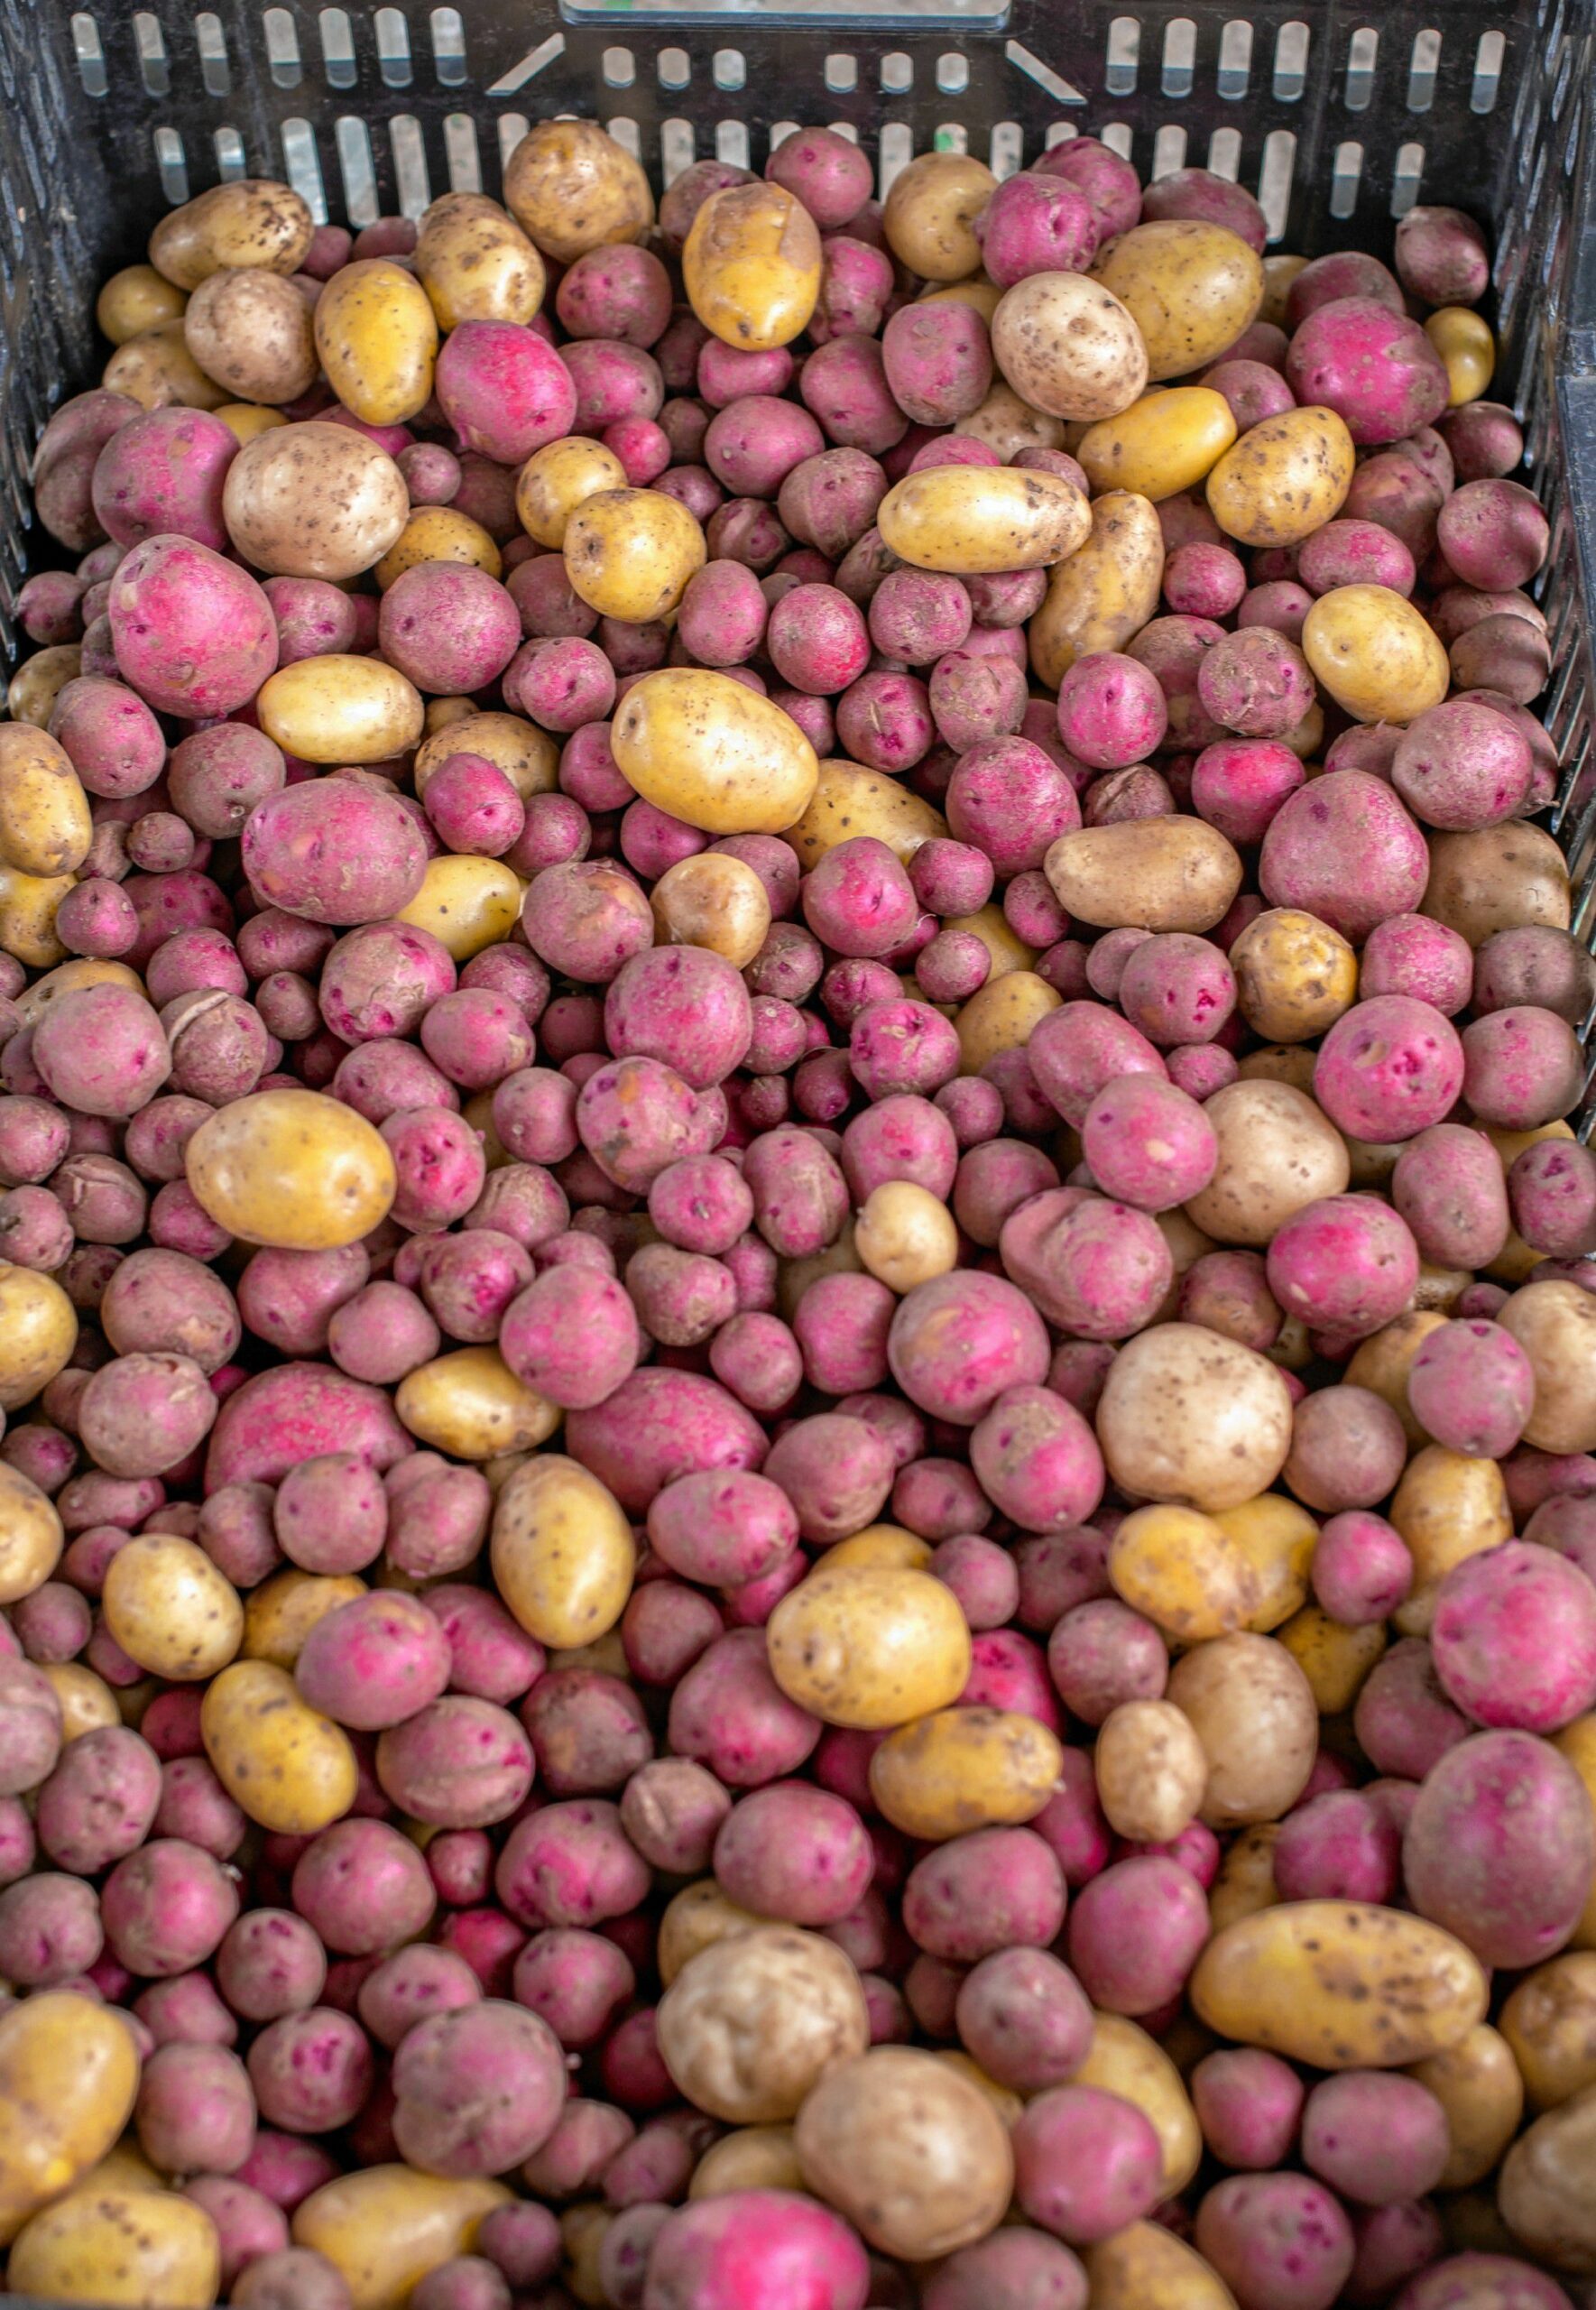 Locally grown potatoes in bulk. (Molly Drummond photograph)